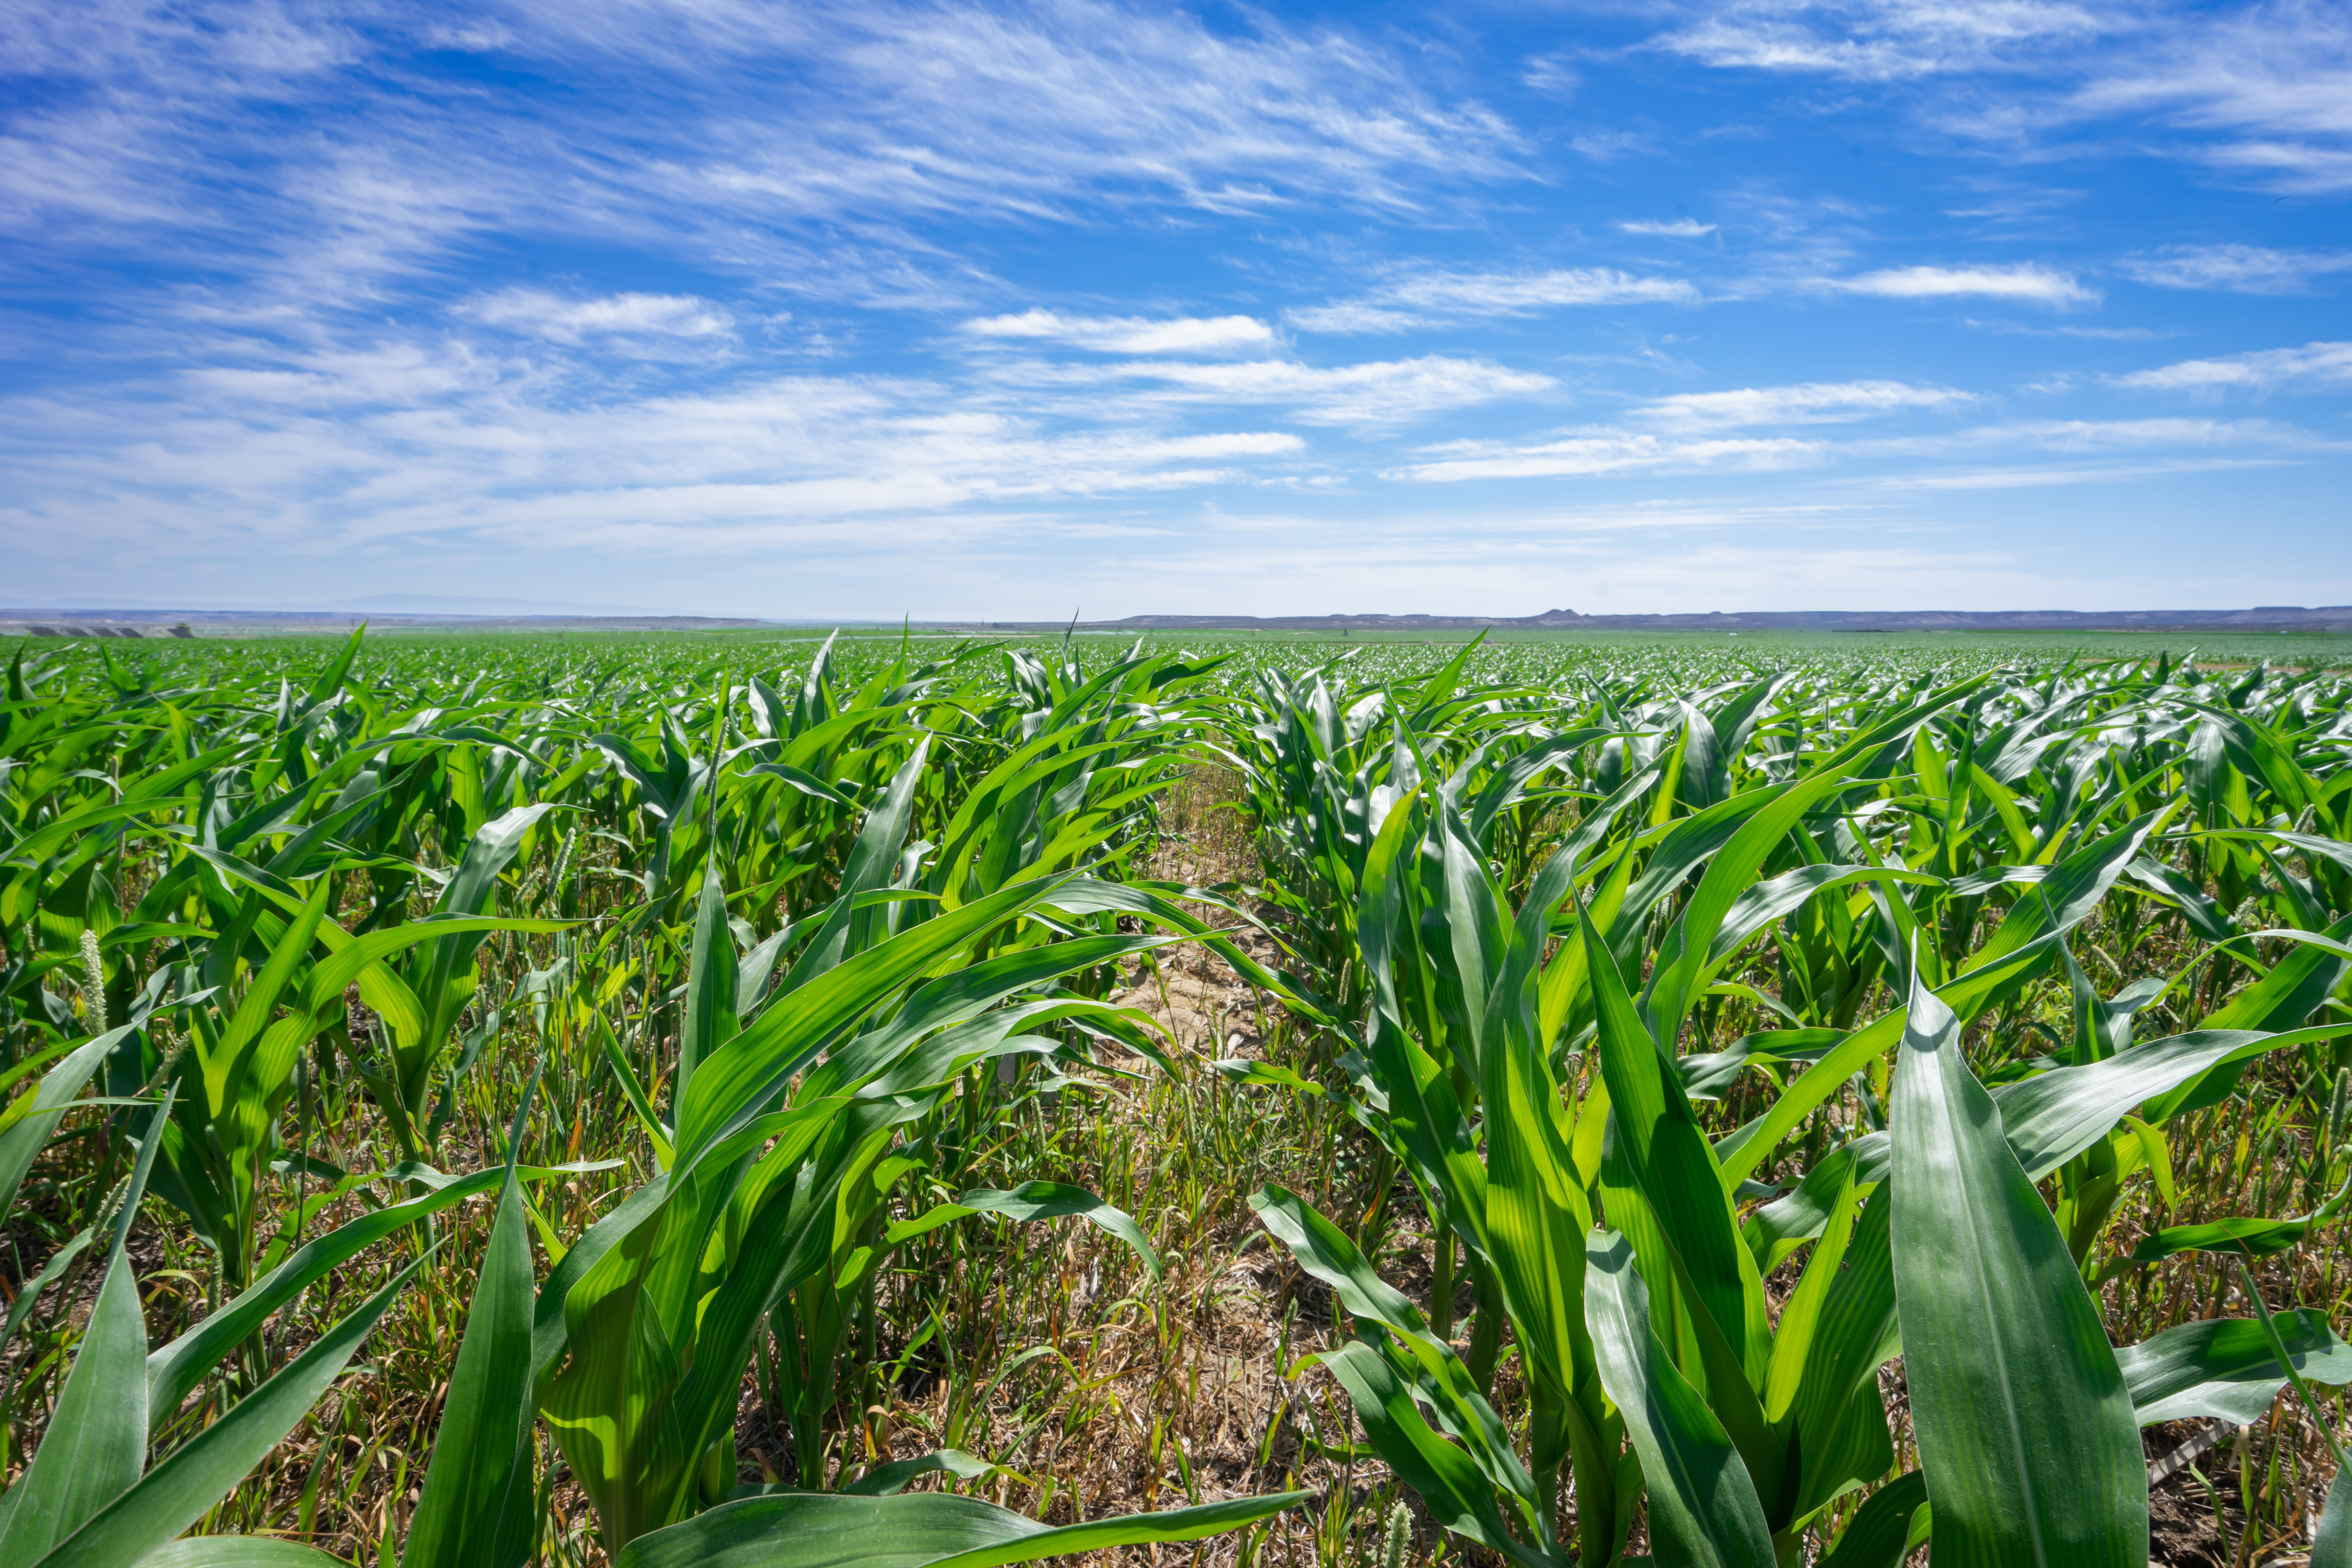 A lush field of crops grows across a blue sky.